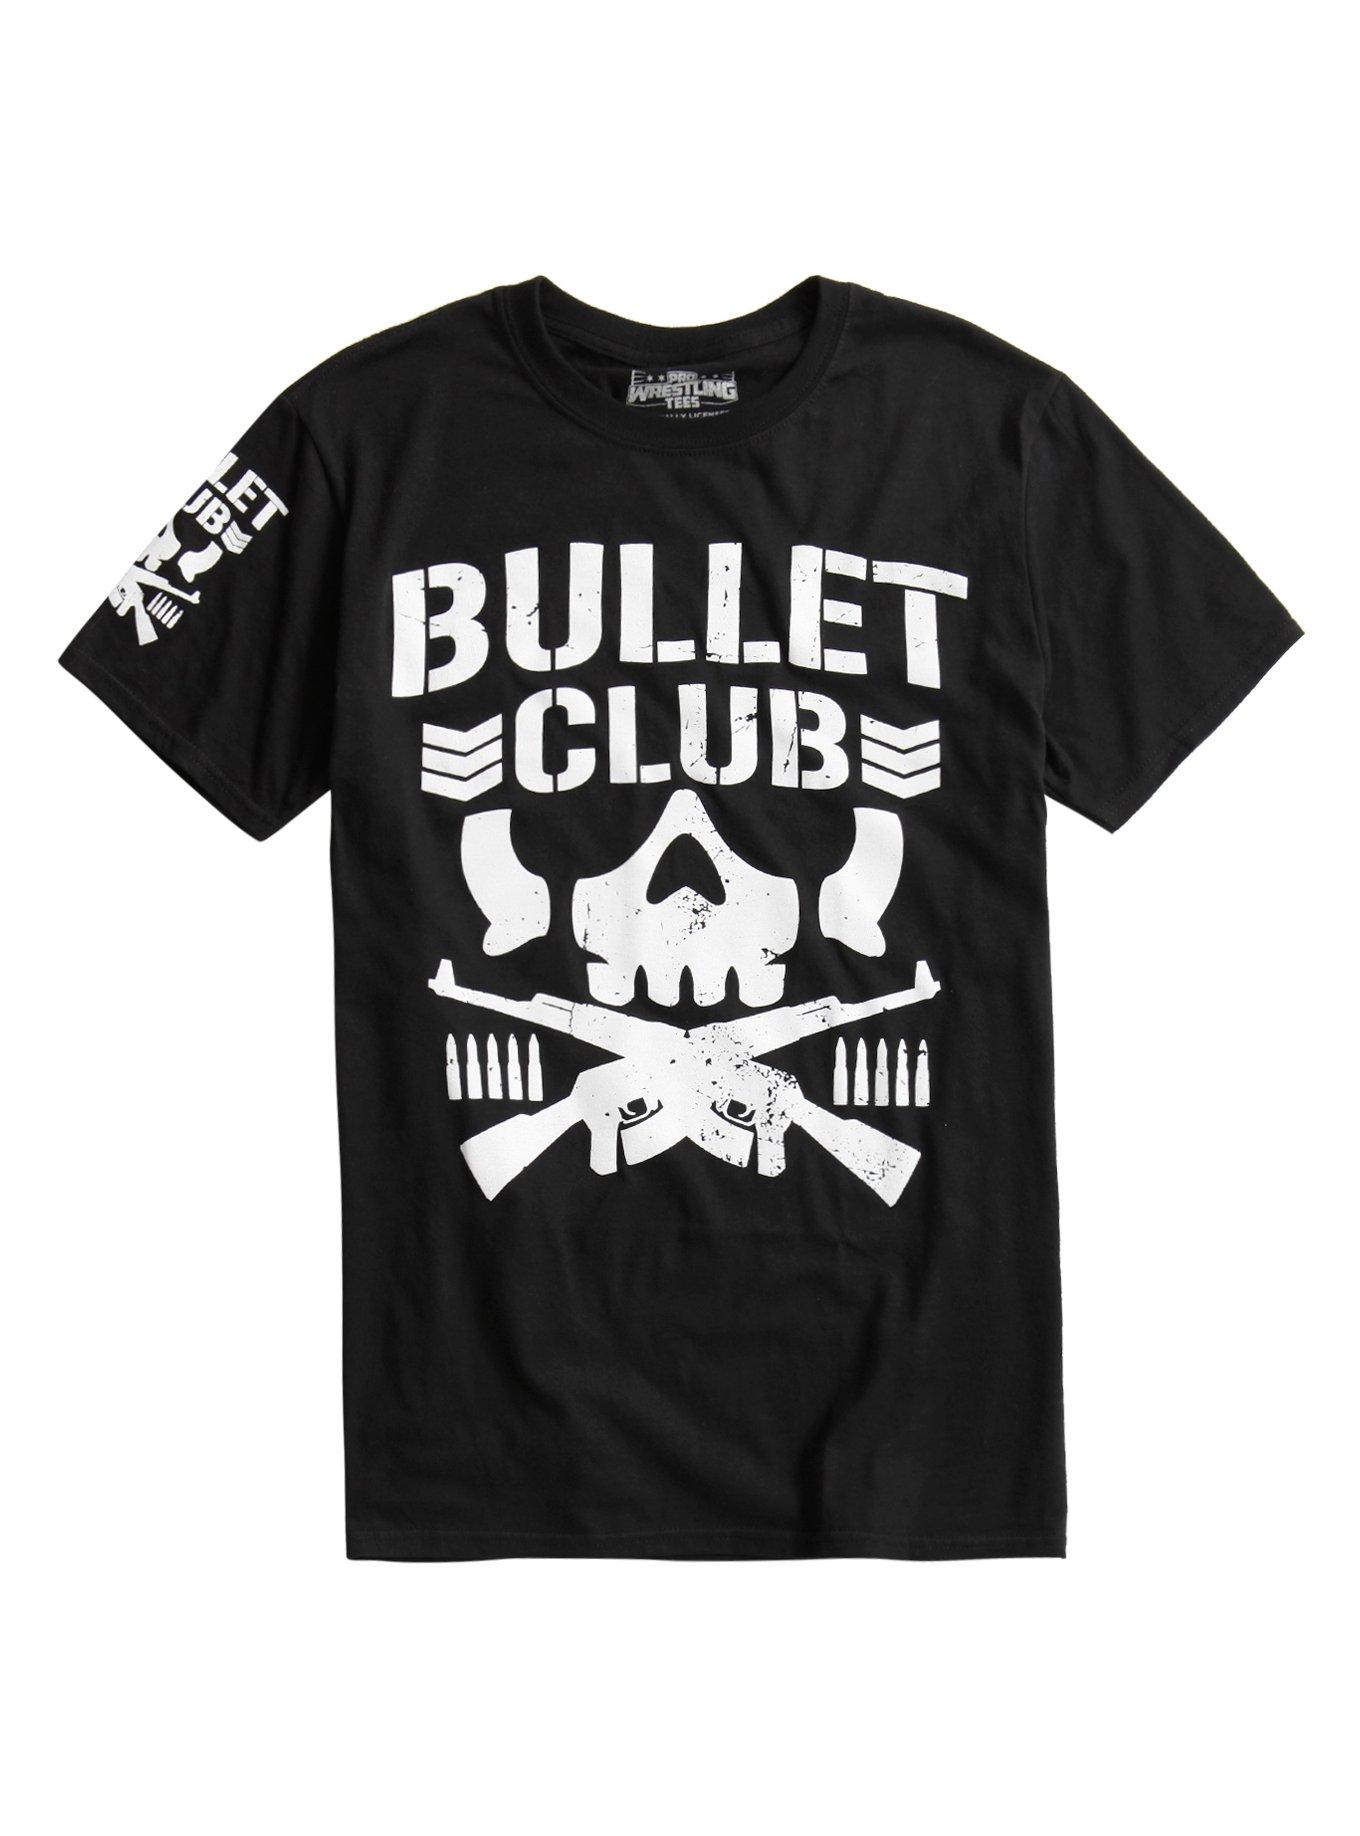 New Japan Pro-Wrestling Bullet Club Logo T-Shirt | Hot Topic